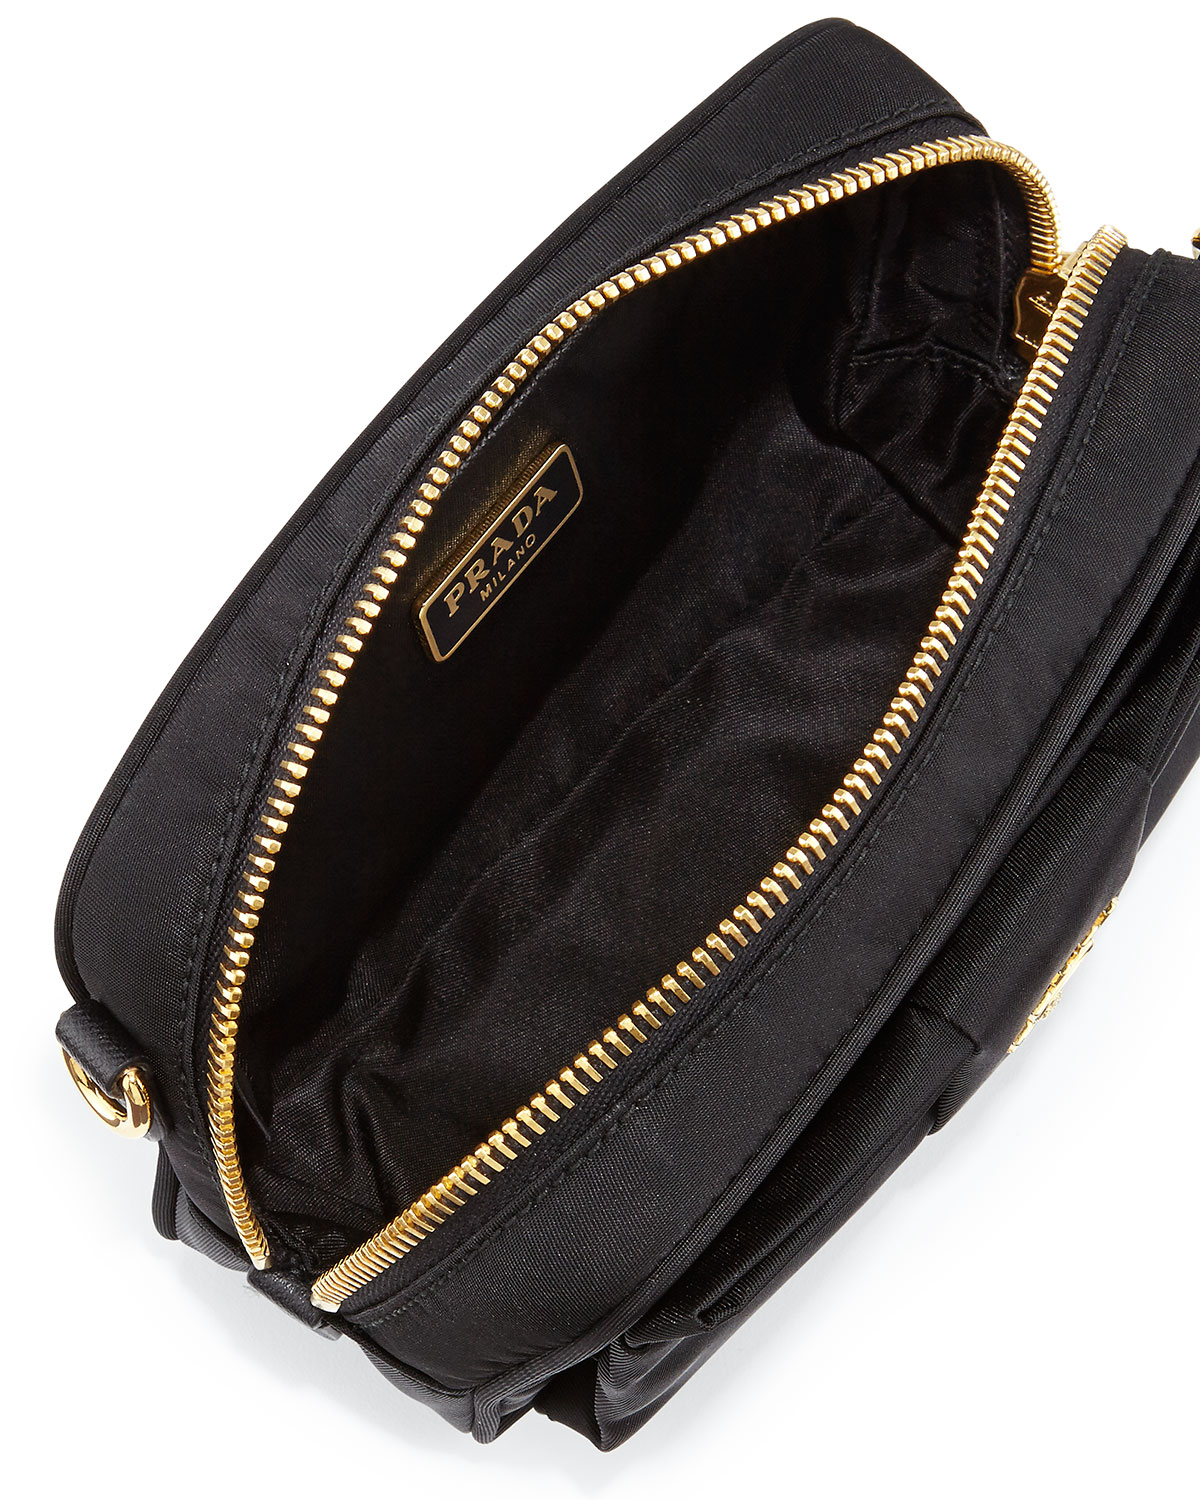 Prada Tessuto Small Bow Crossbody Bag in Black (Nero) (Black) - Lyst